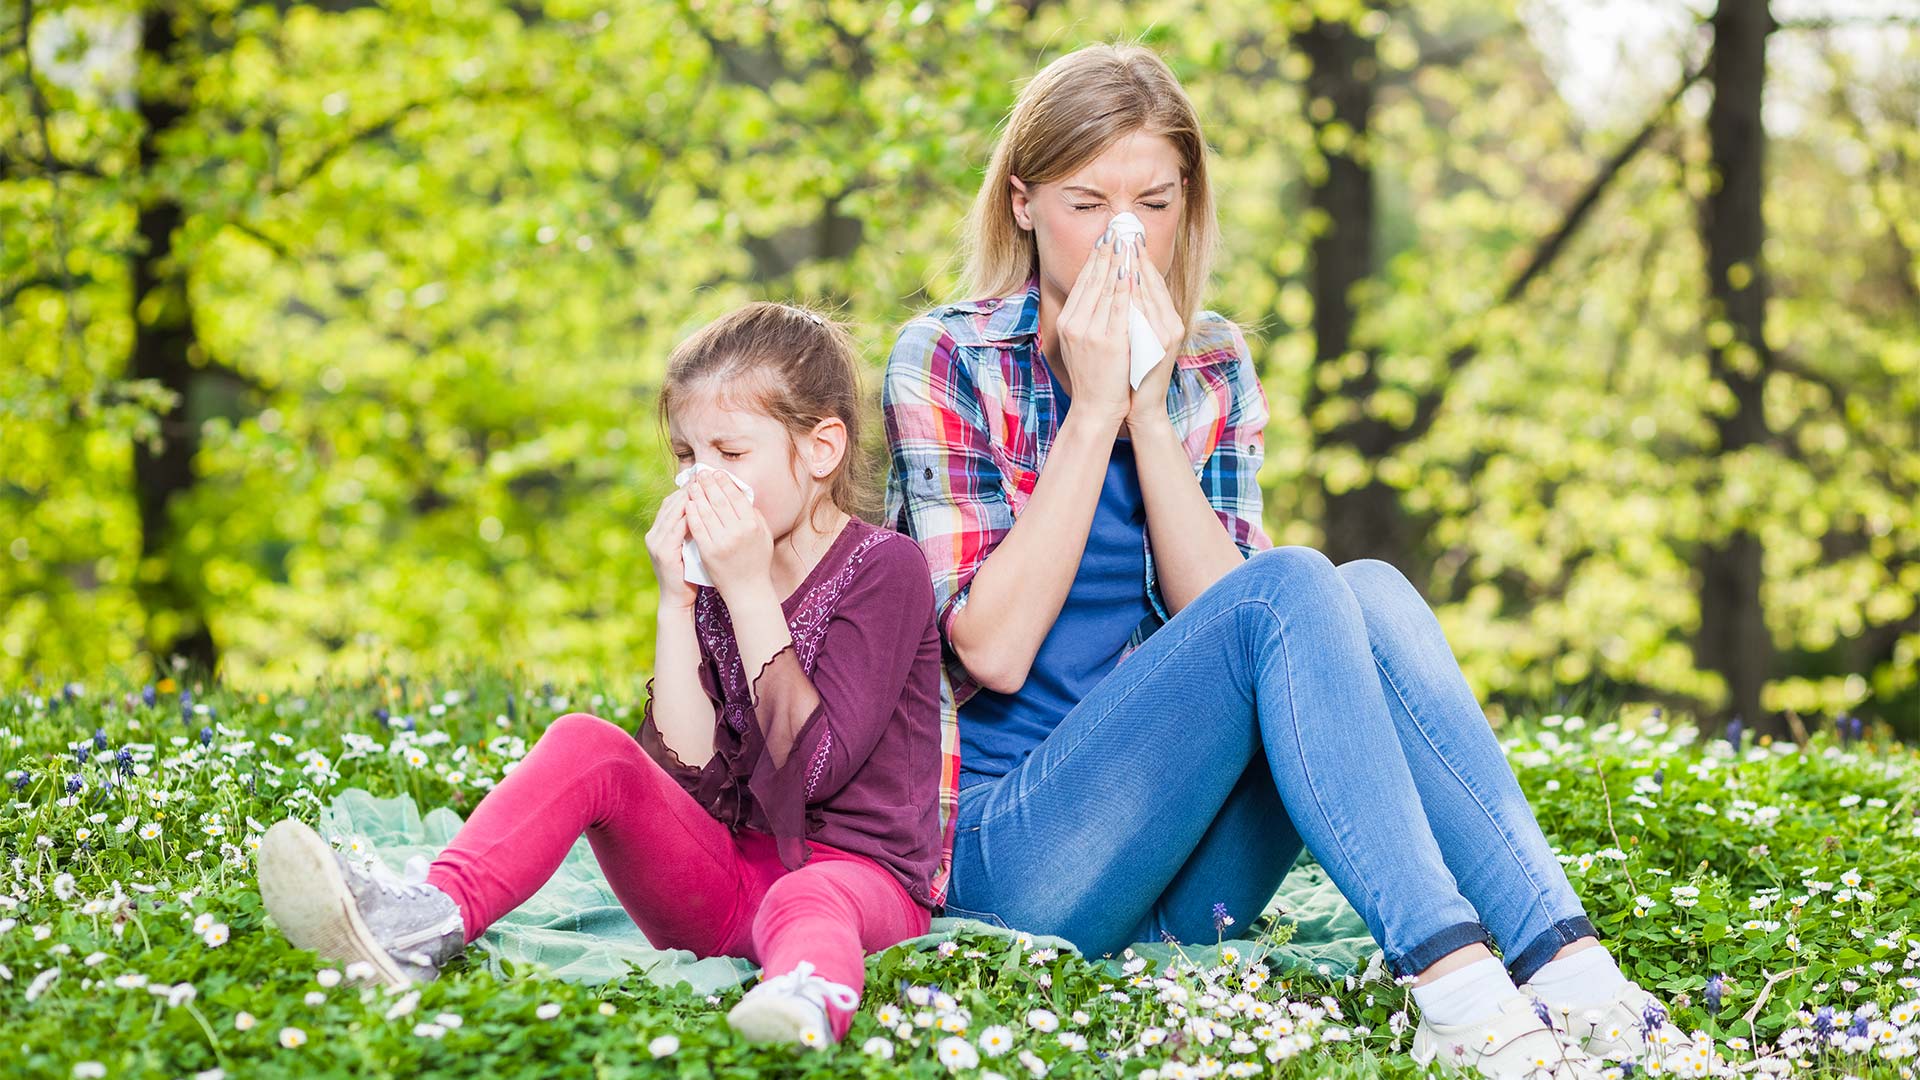 allergy-test-mother-daughter-sneezing-grass-pollen